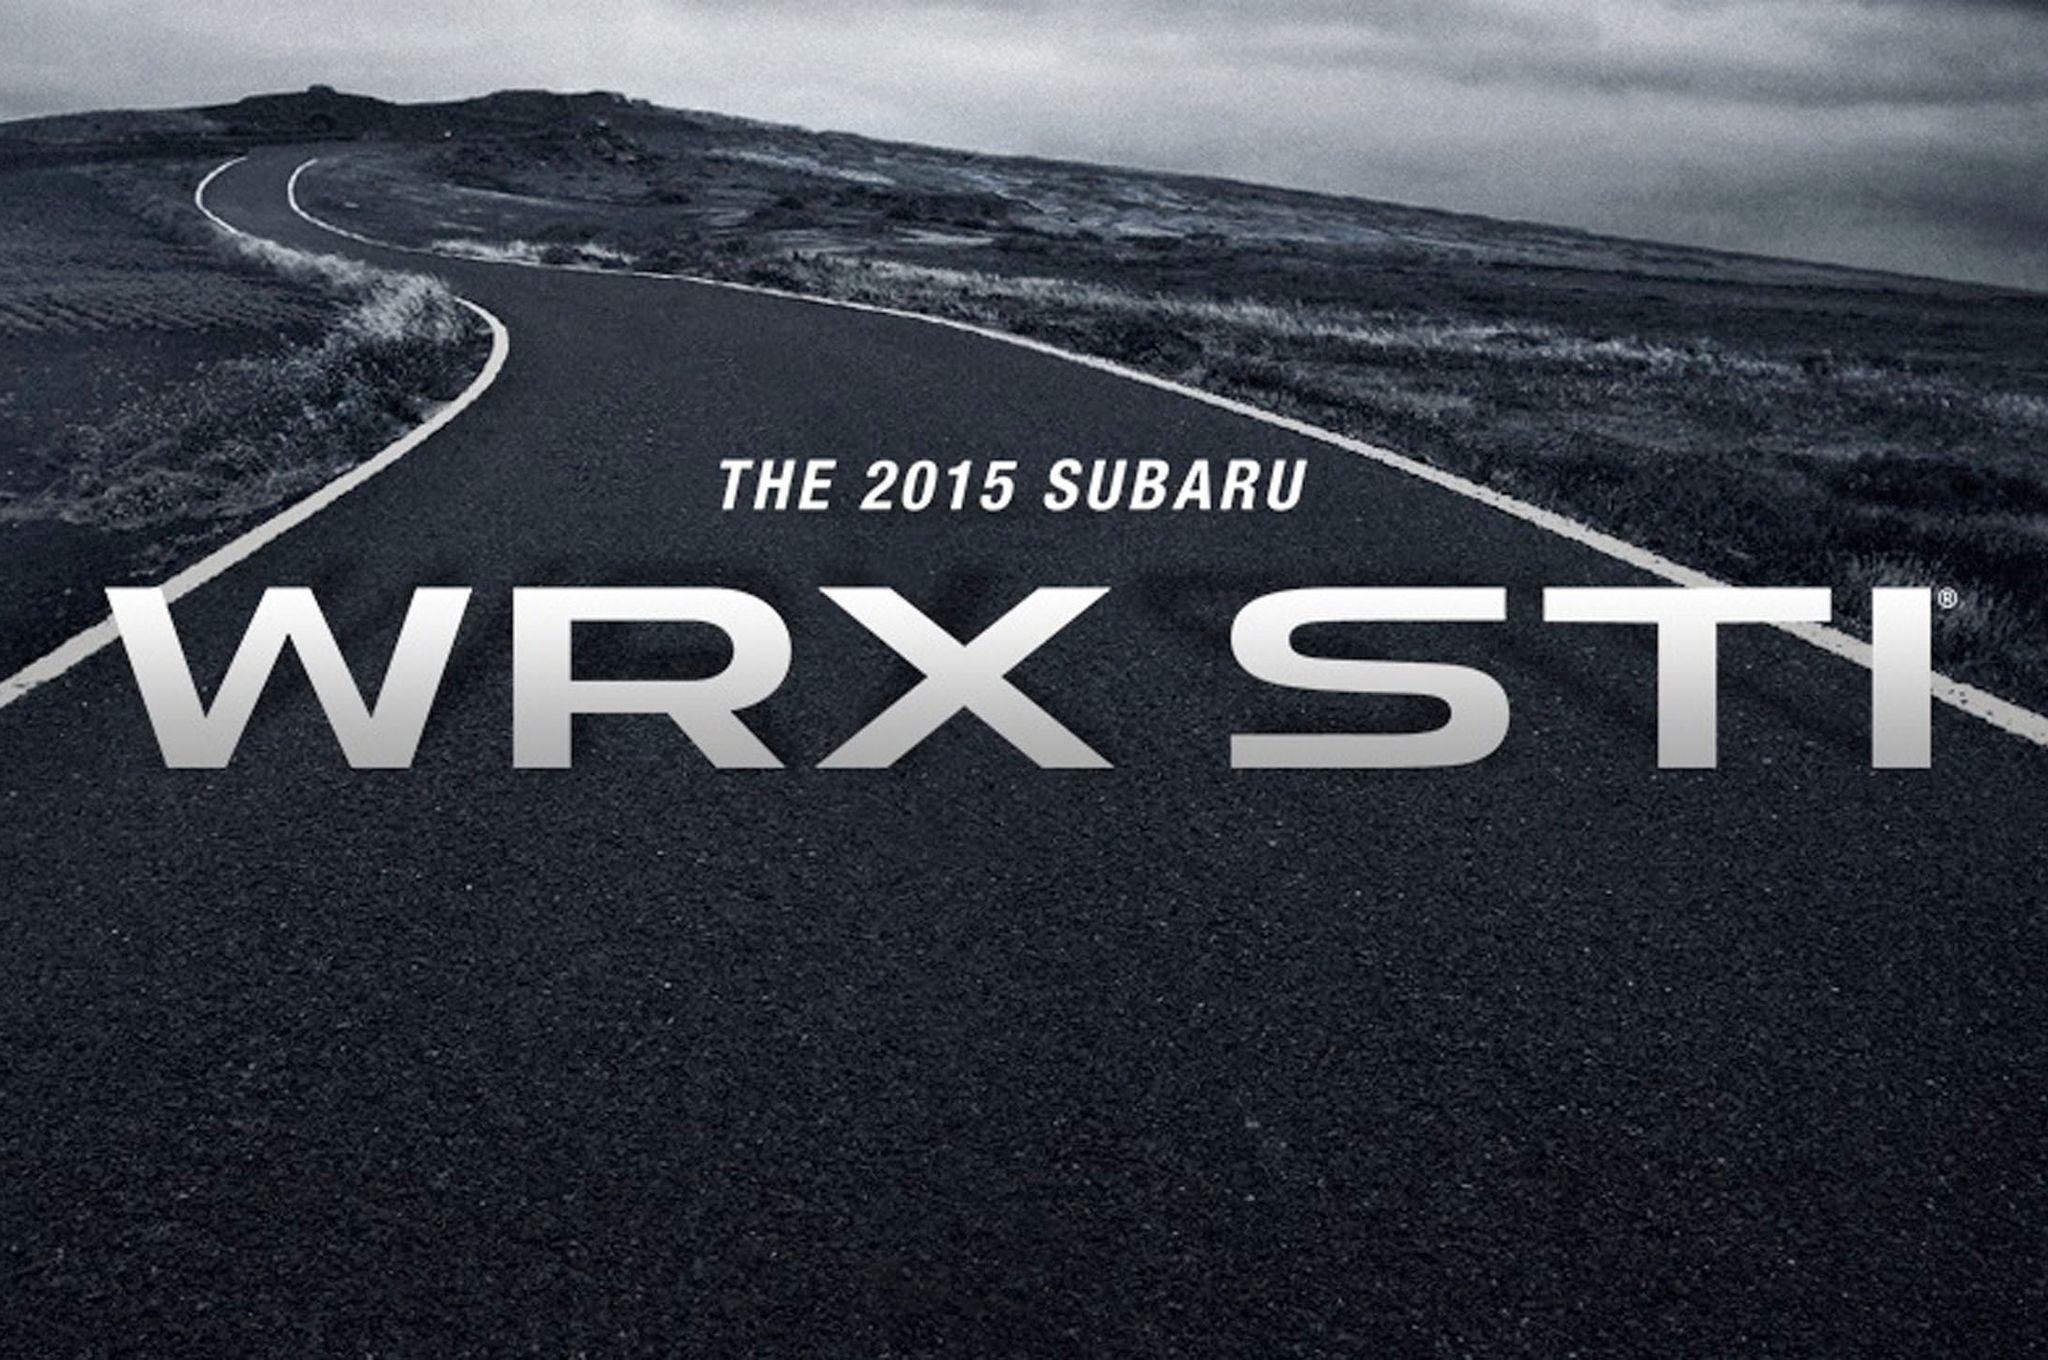 WRX Logo - 2015 Subaru WRX STI to Debut at Detroit - Motor Trend